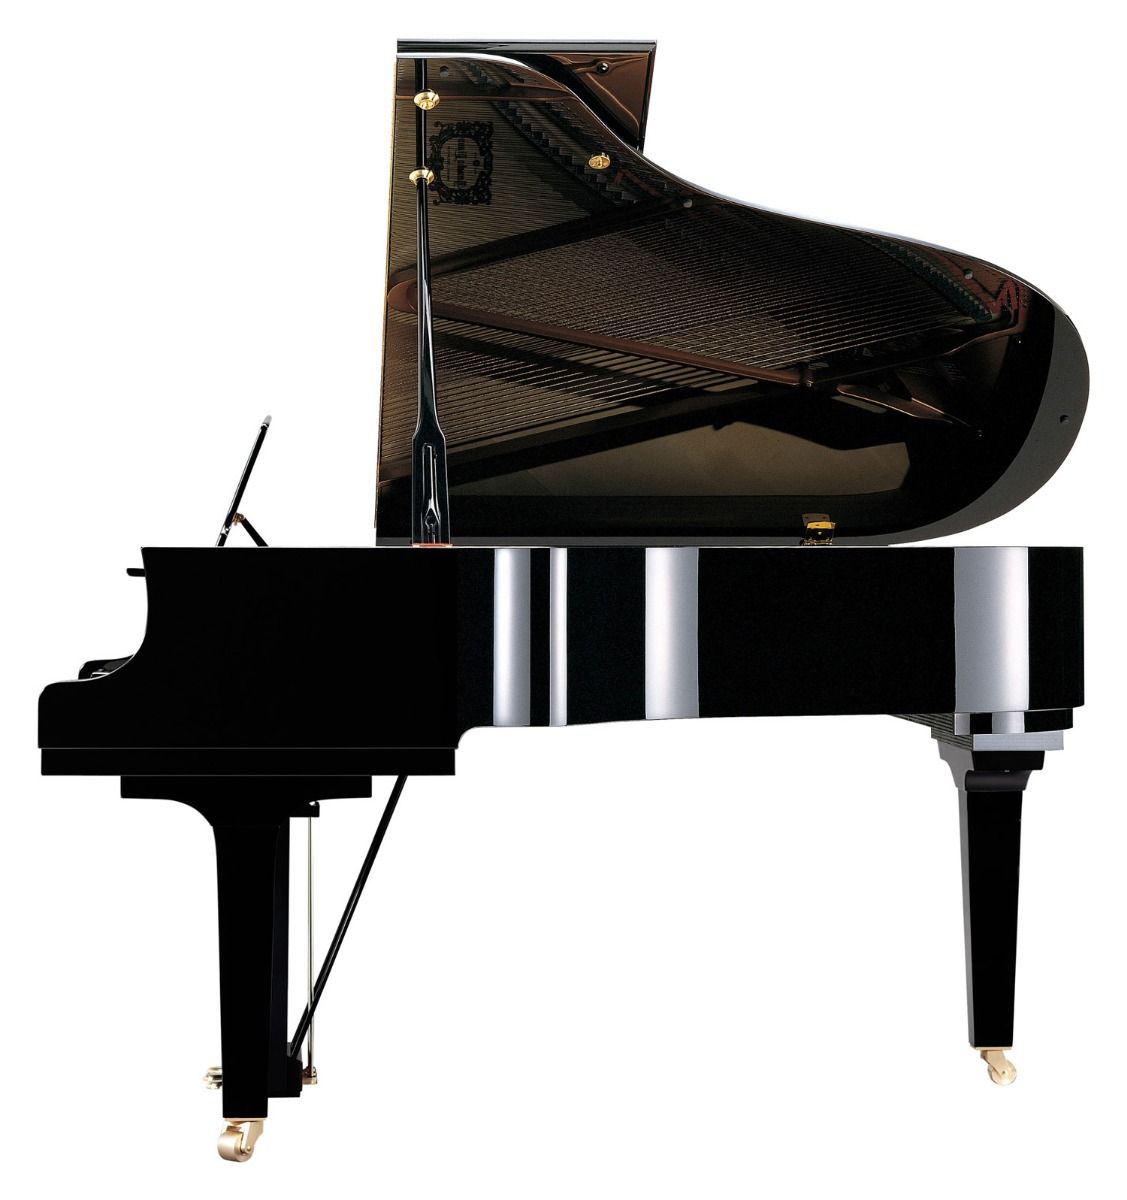 Yamaha C3X 6'1" Grand Piano In Polished Ebony